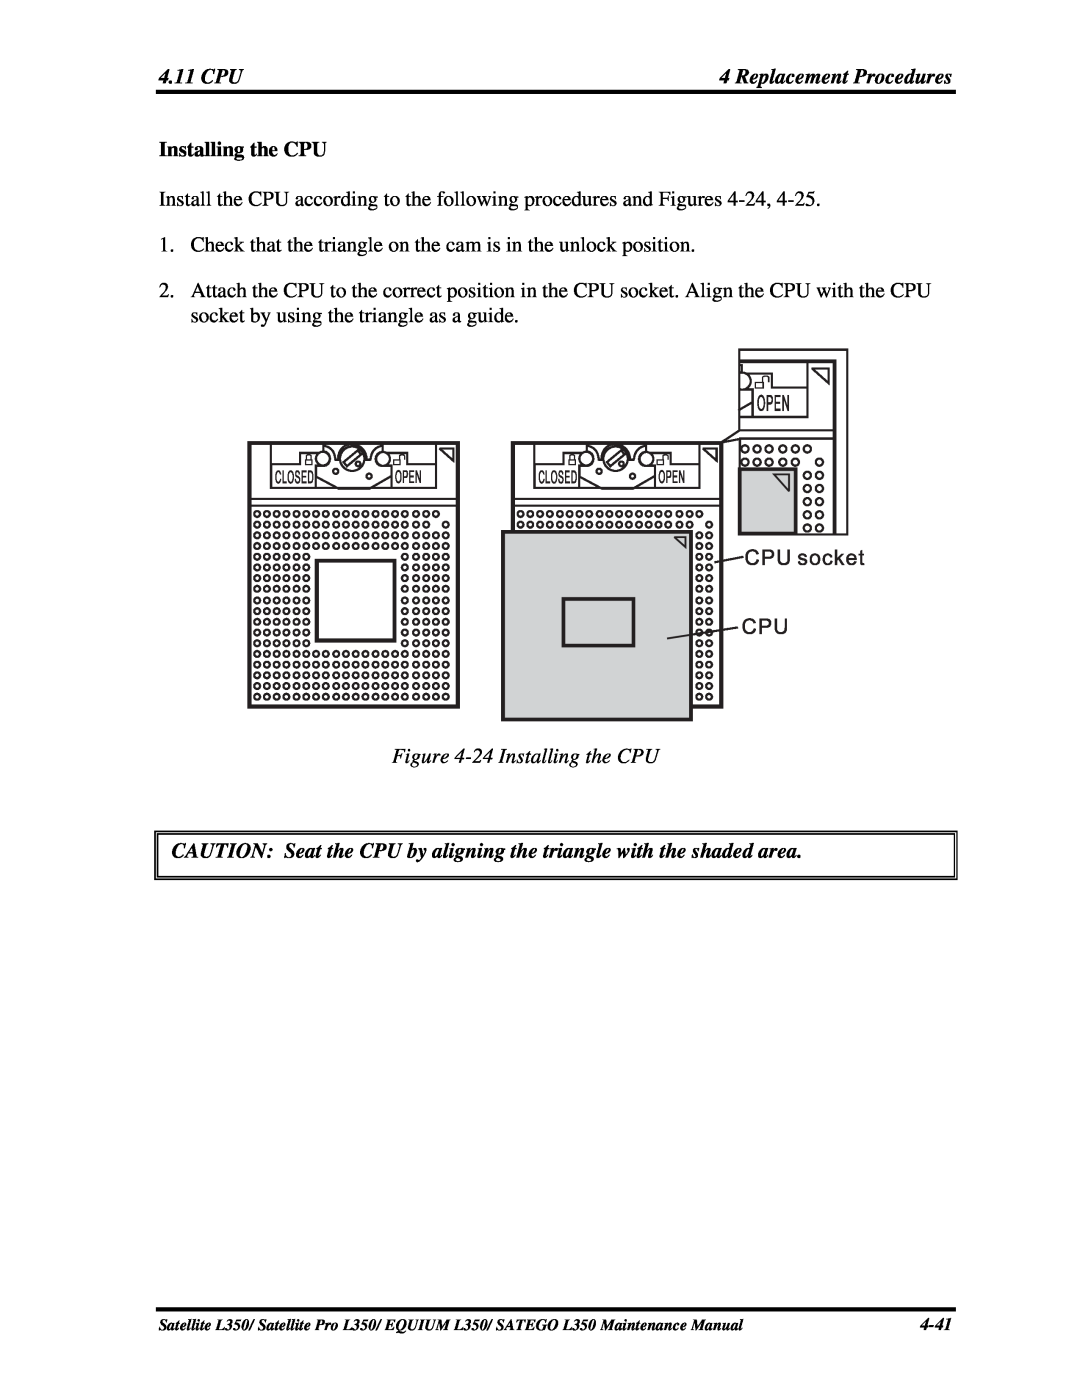 Toshiba PSLD3X, PSLD1X, PSLD2X manual 24 Installing the CPU 